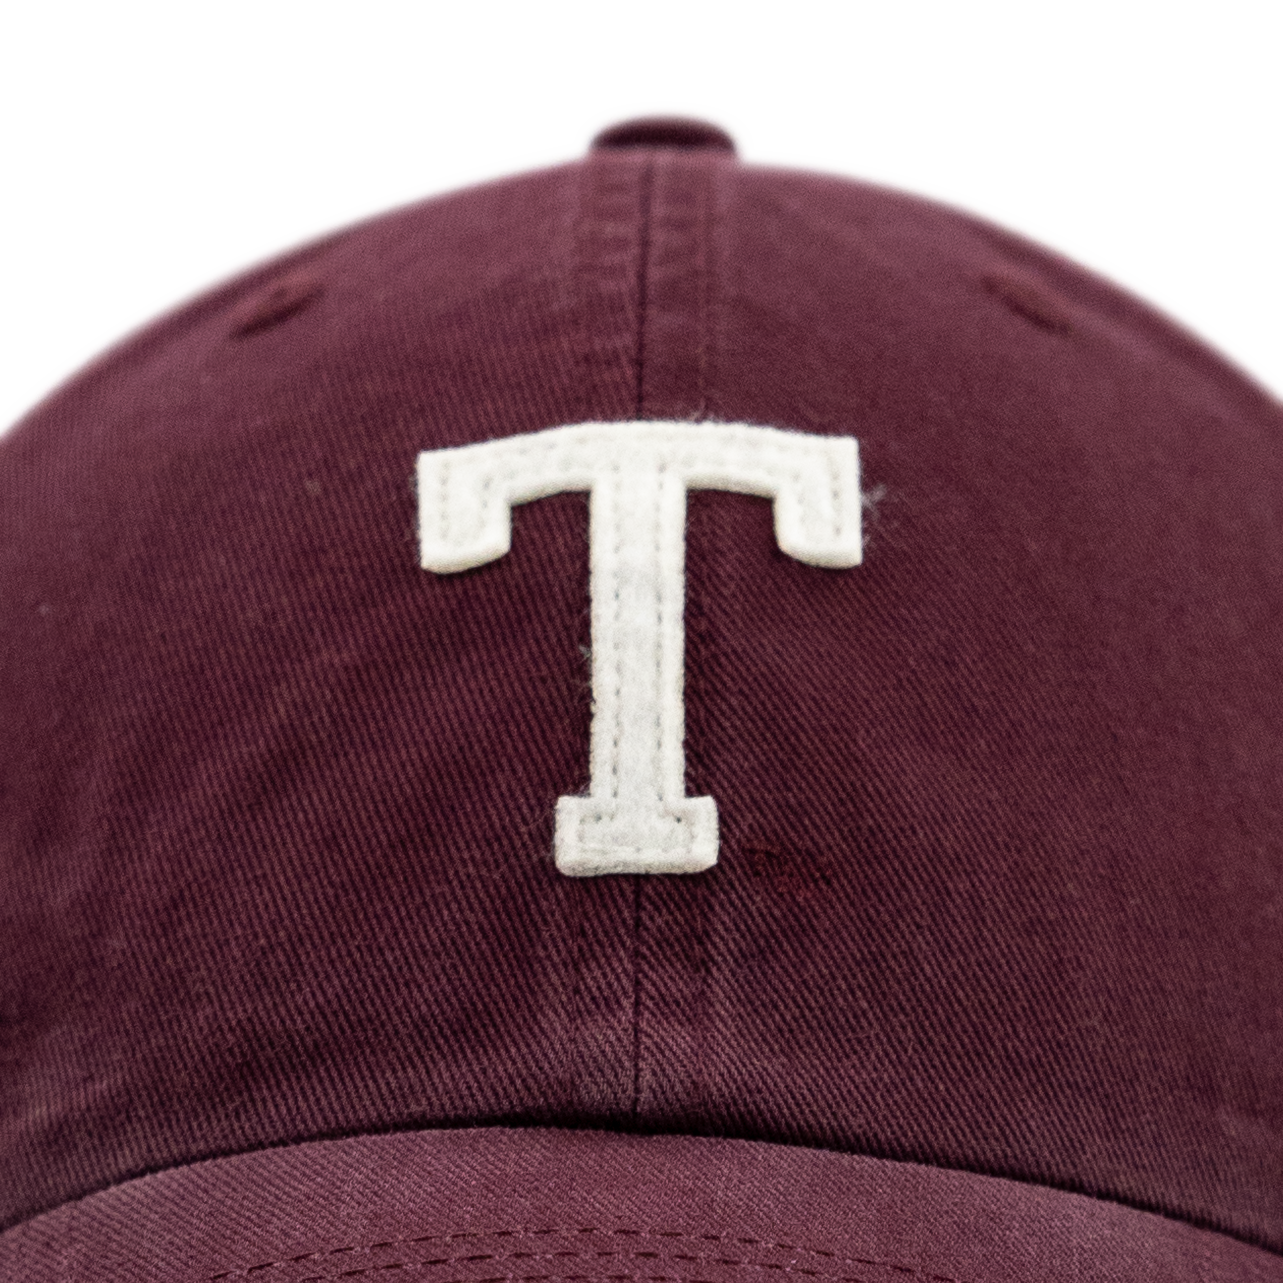 Tamu '47 T Finley Maroon Hat